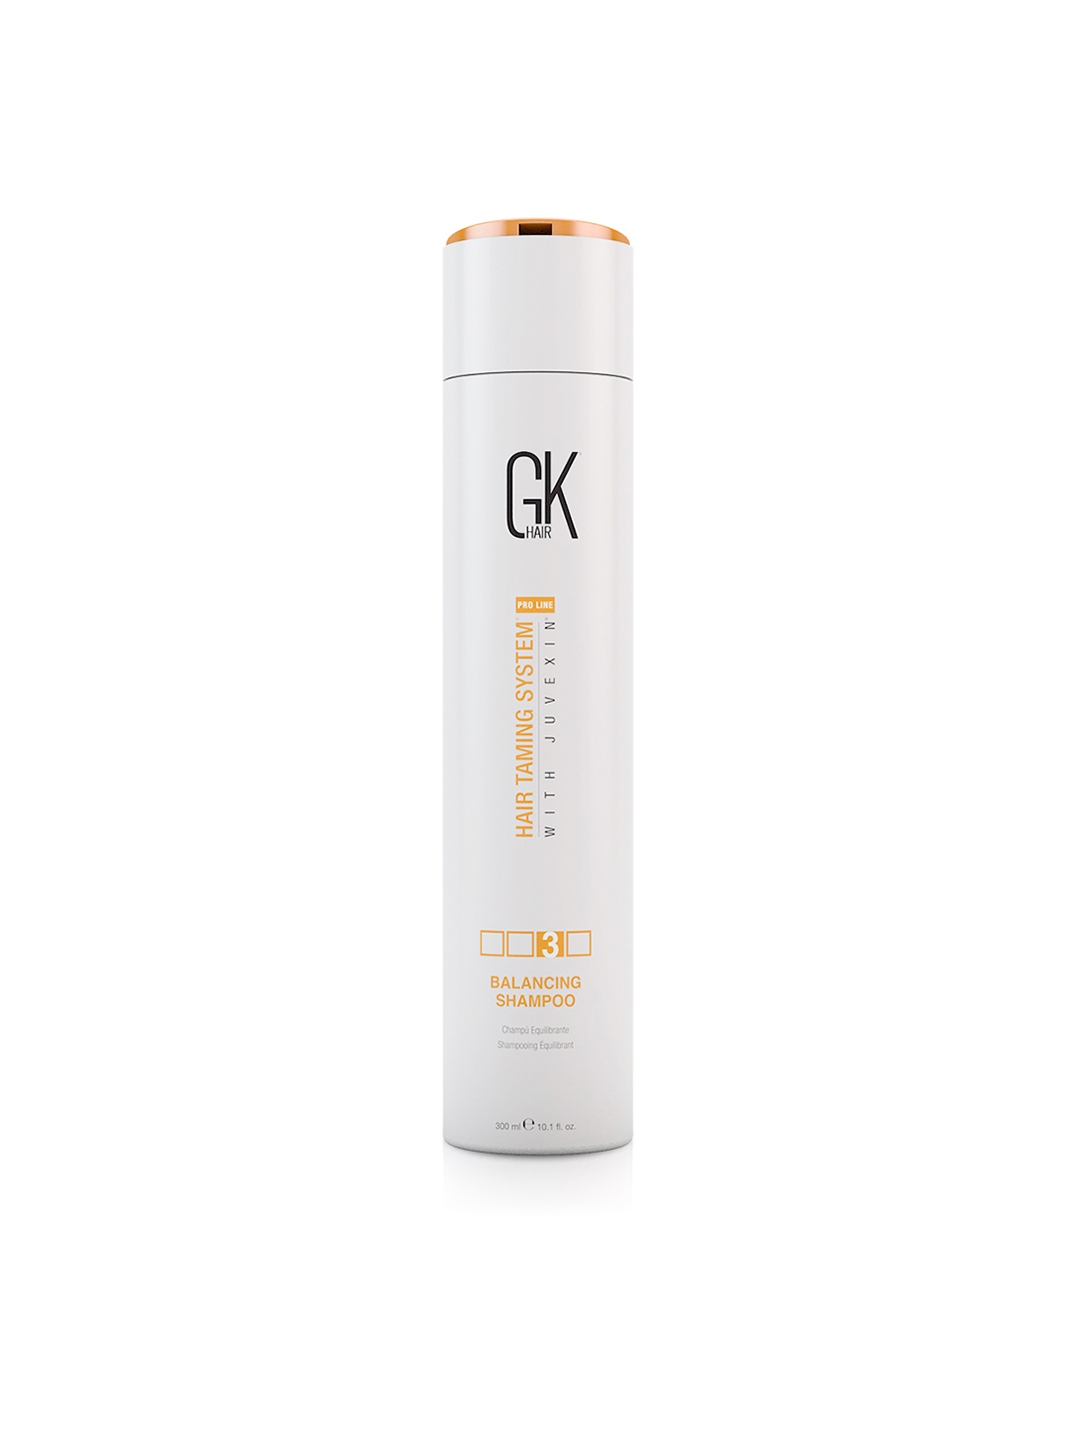 GK Hair Balancing Shampoo 300ml  Modish7